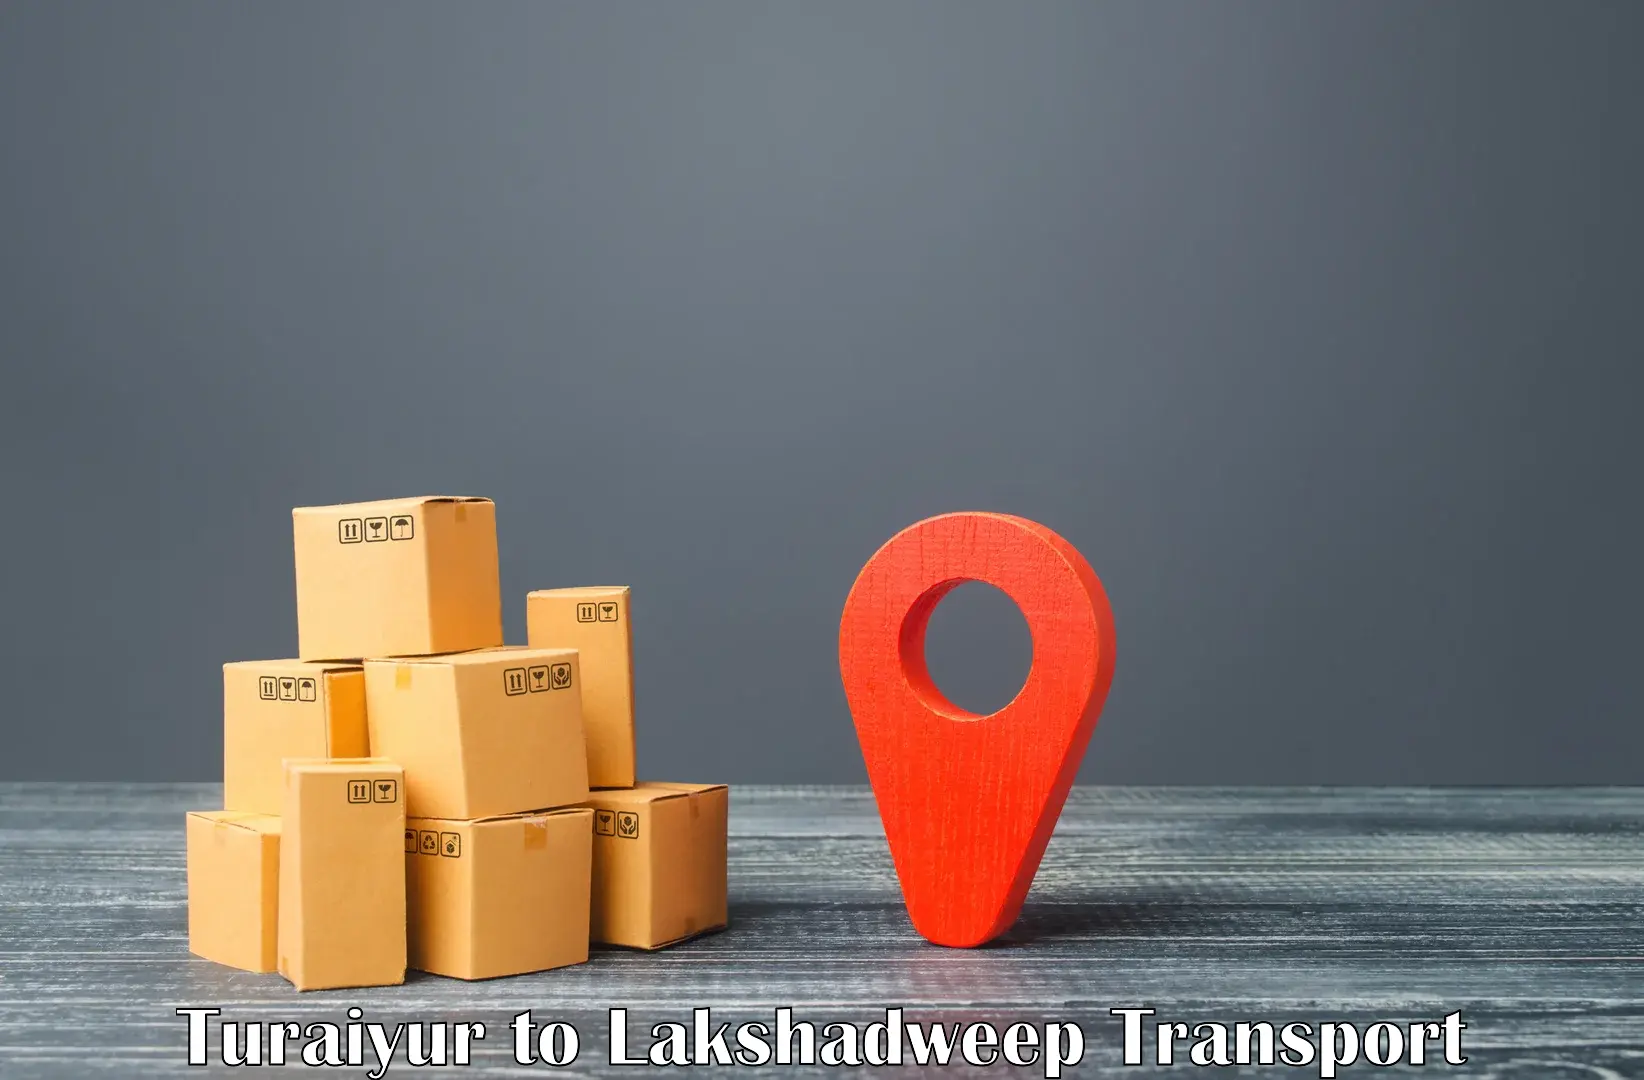 Transport in sharing Turaiyur to Lakshadweep